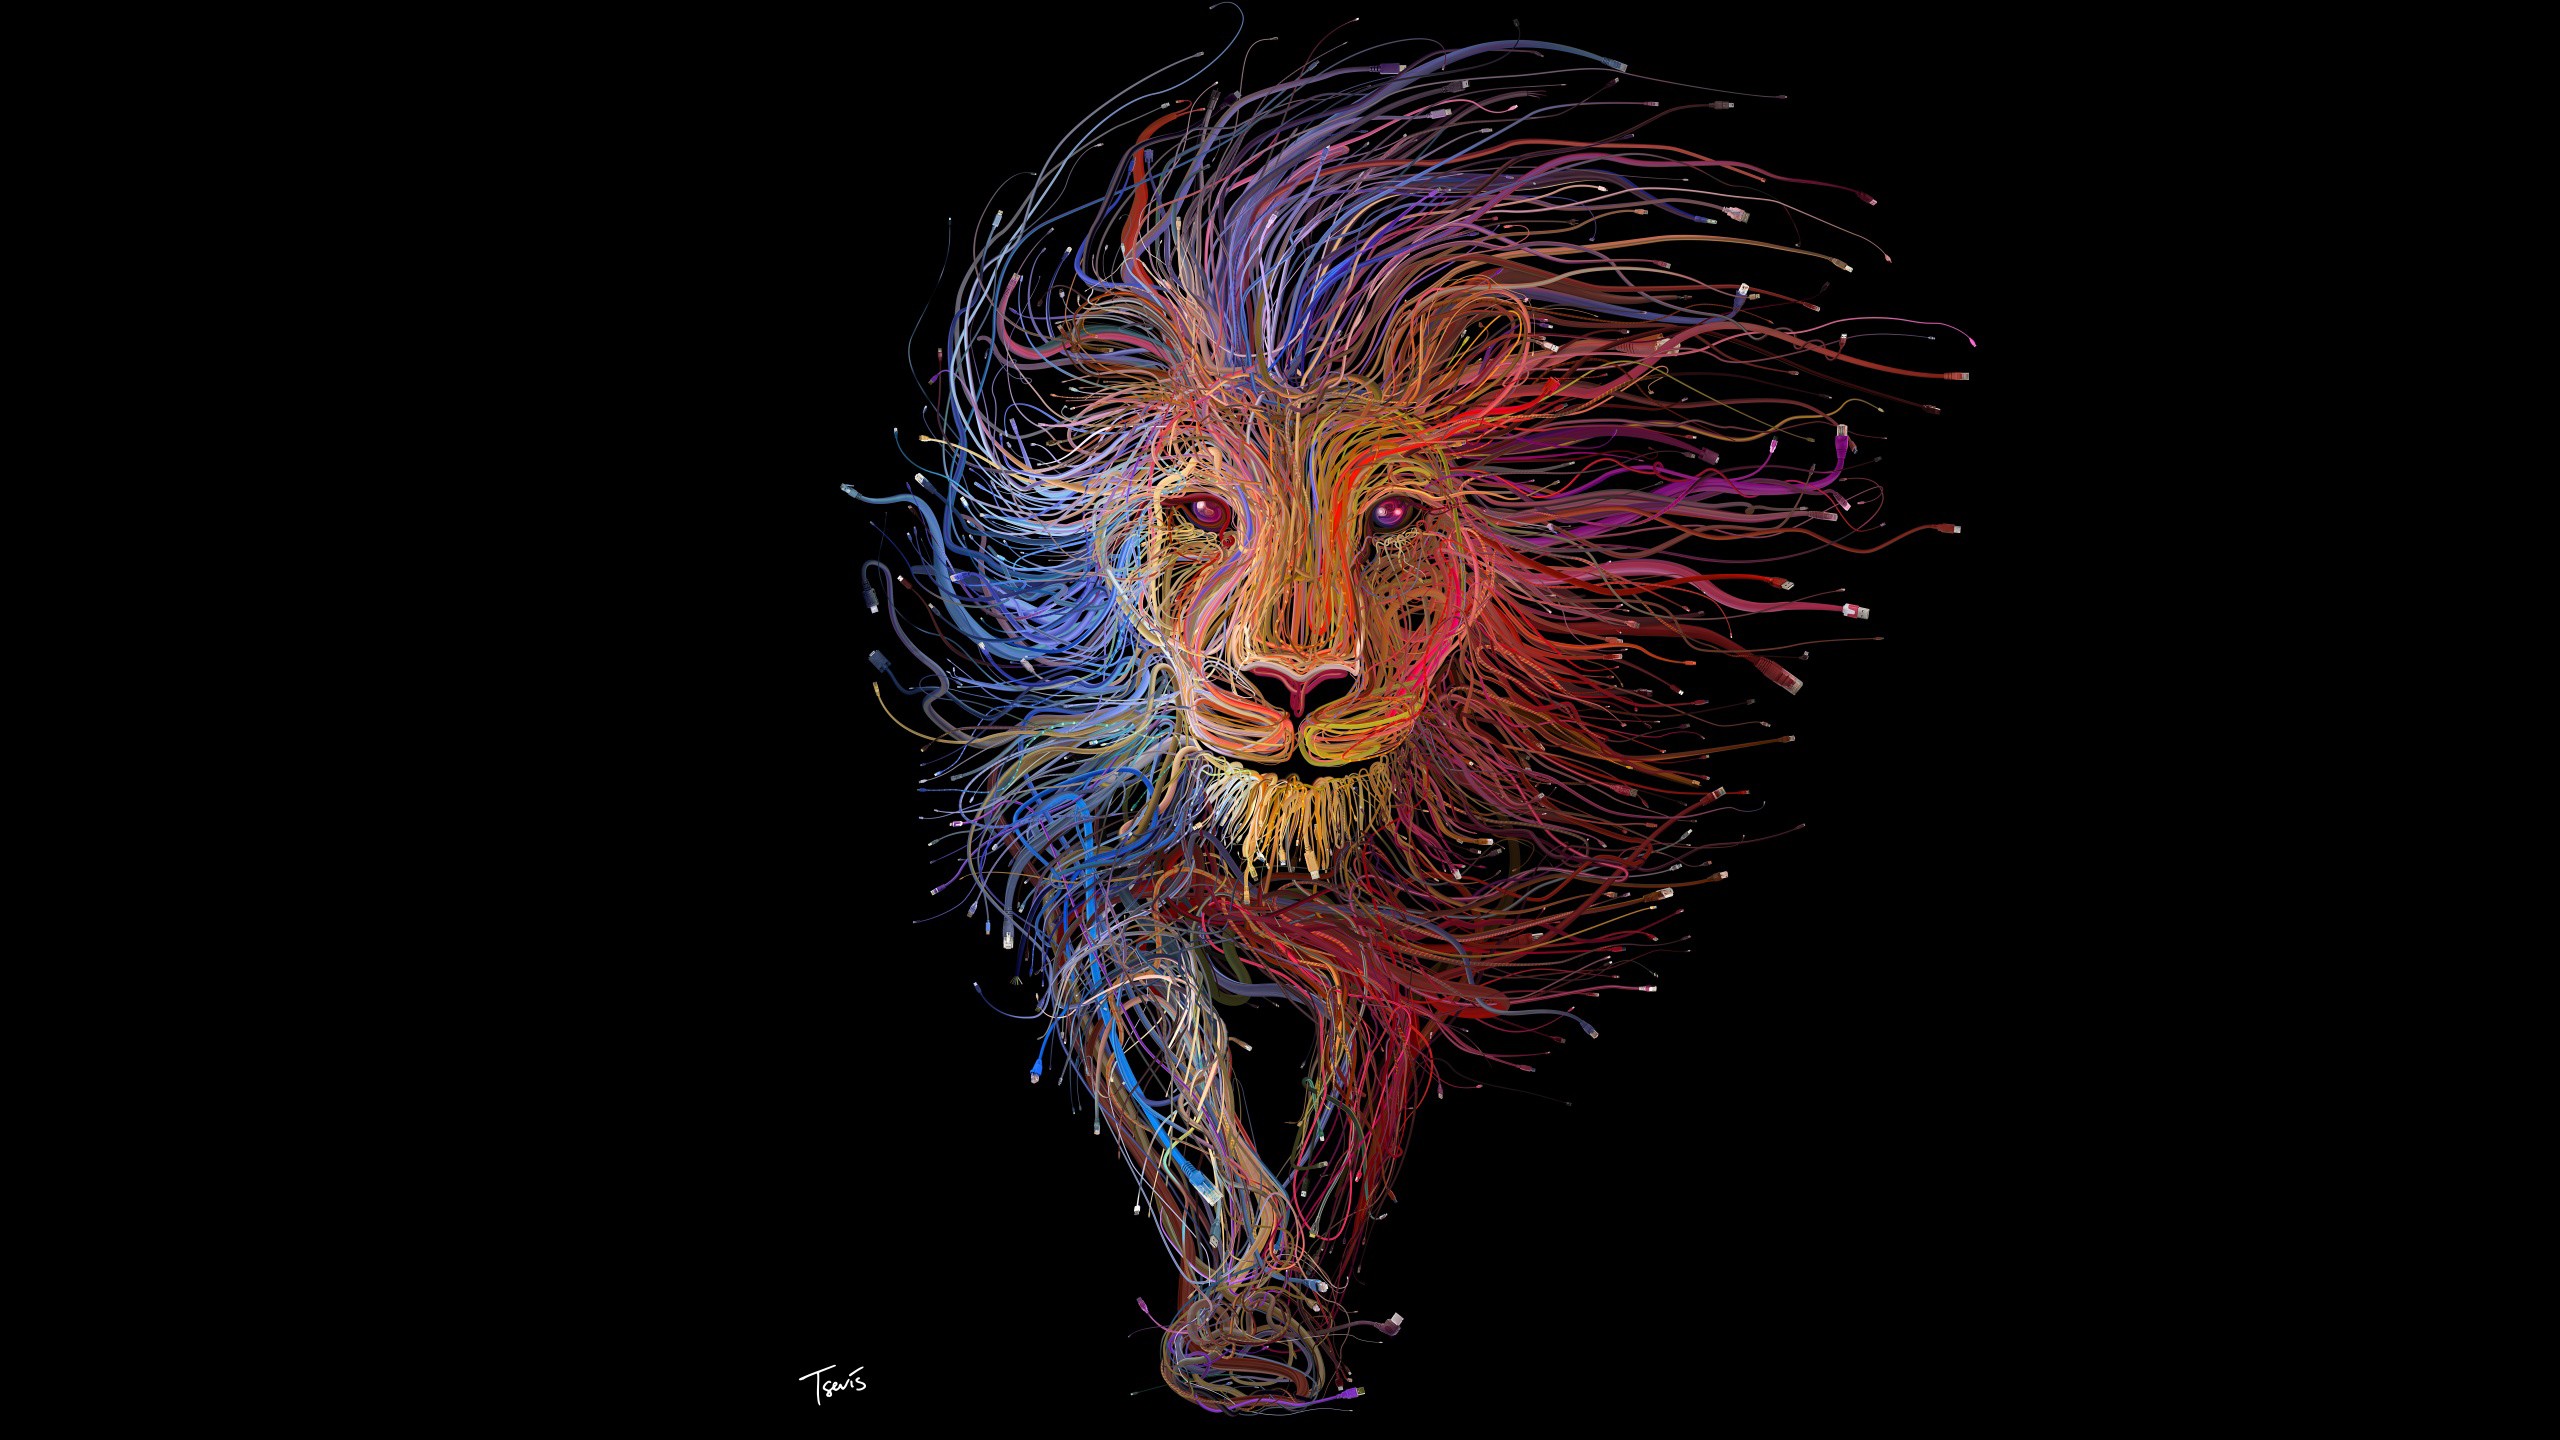 General 2560x1440 lion colorful digital art animals black background ethernet USB wires minimalism mammals